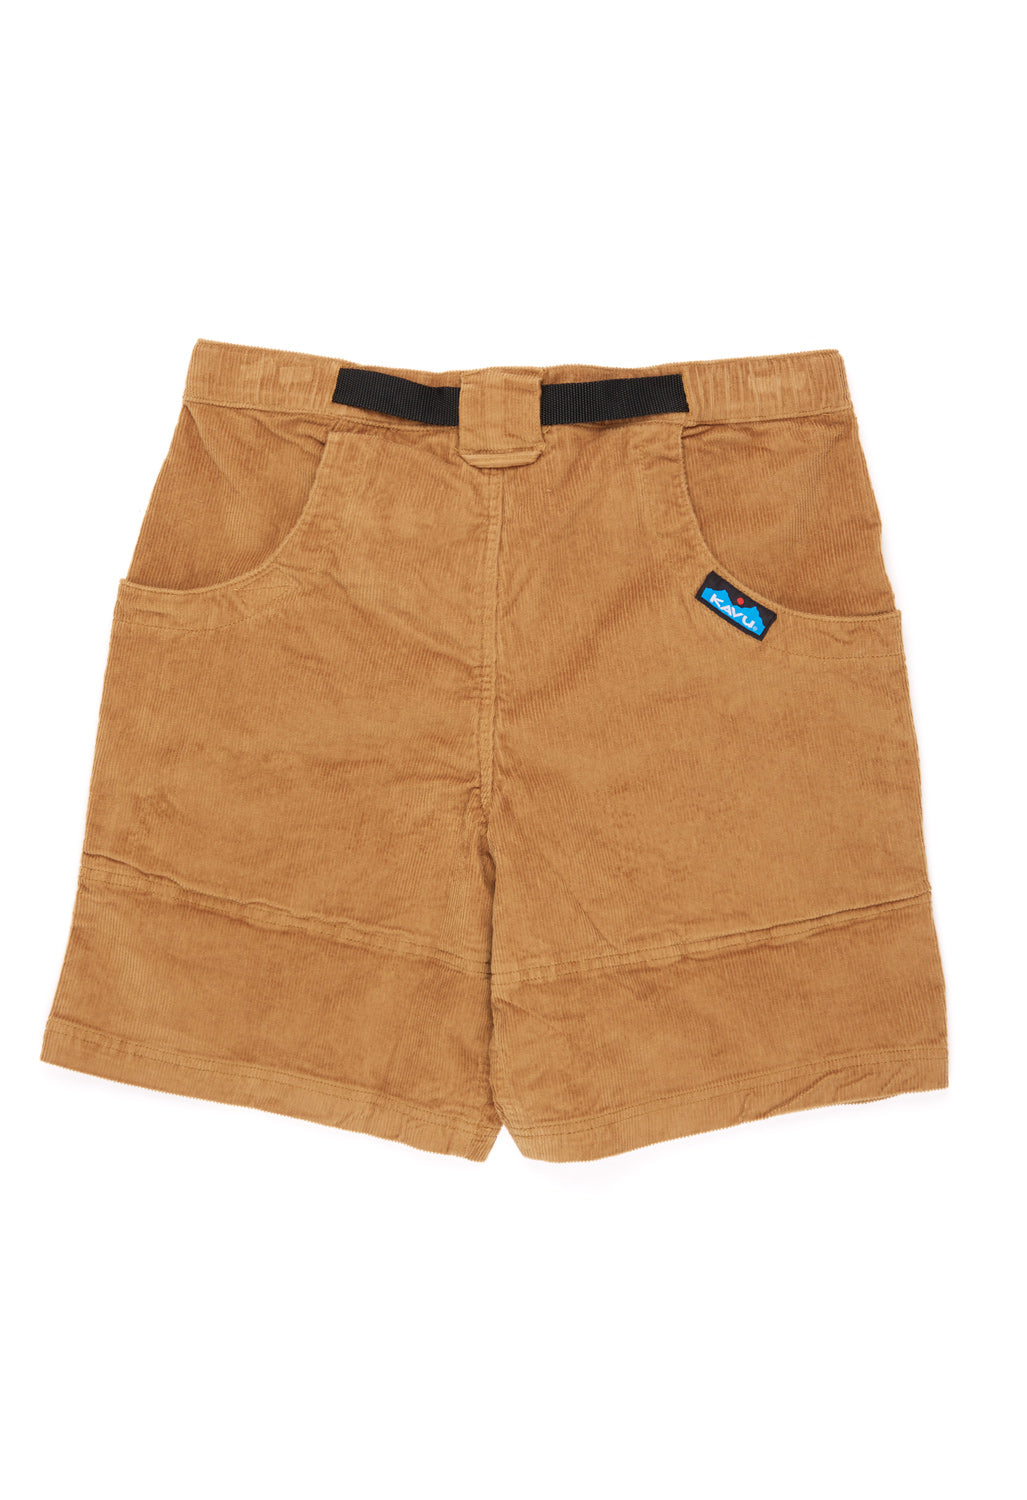 KAVU Men's Chilli Cord Shorts - Basswood